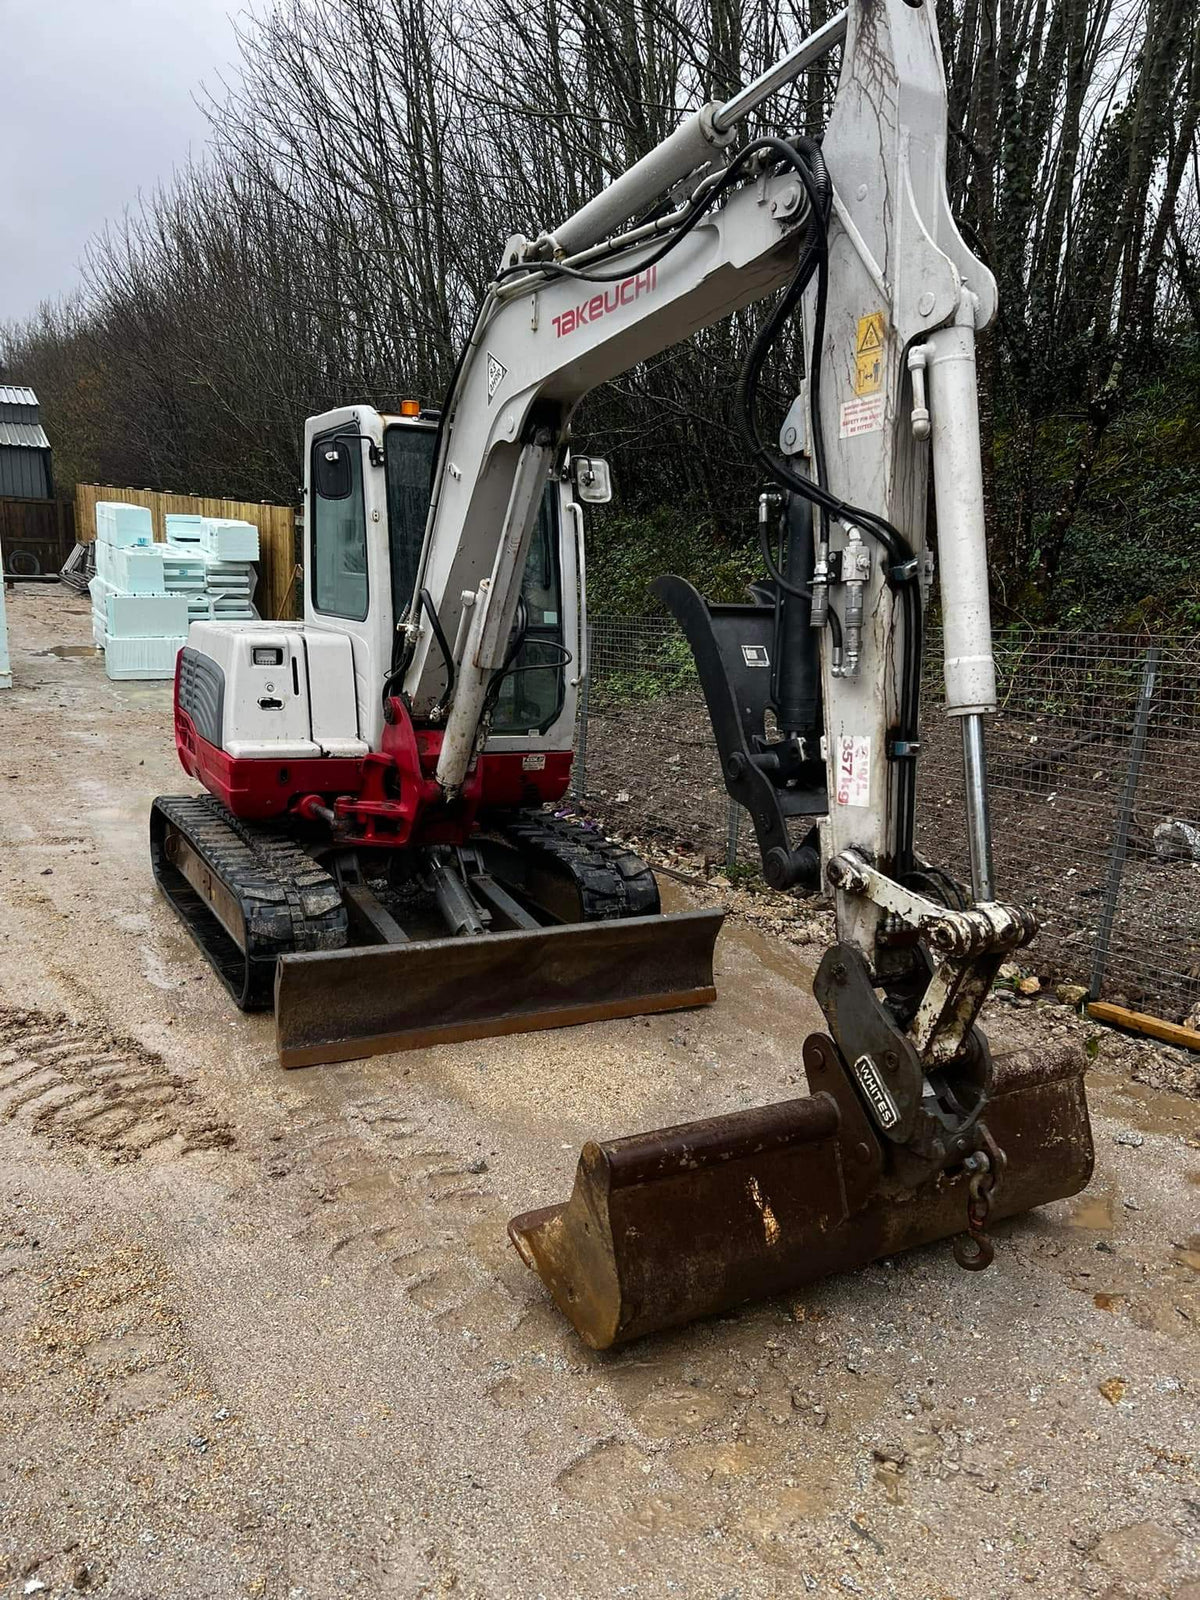 Raptor 900 Hydraulic Excavator Thumb - 4 to 6 tonne